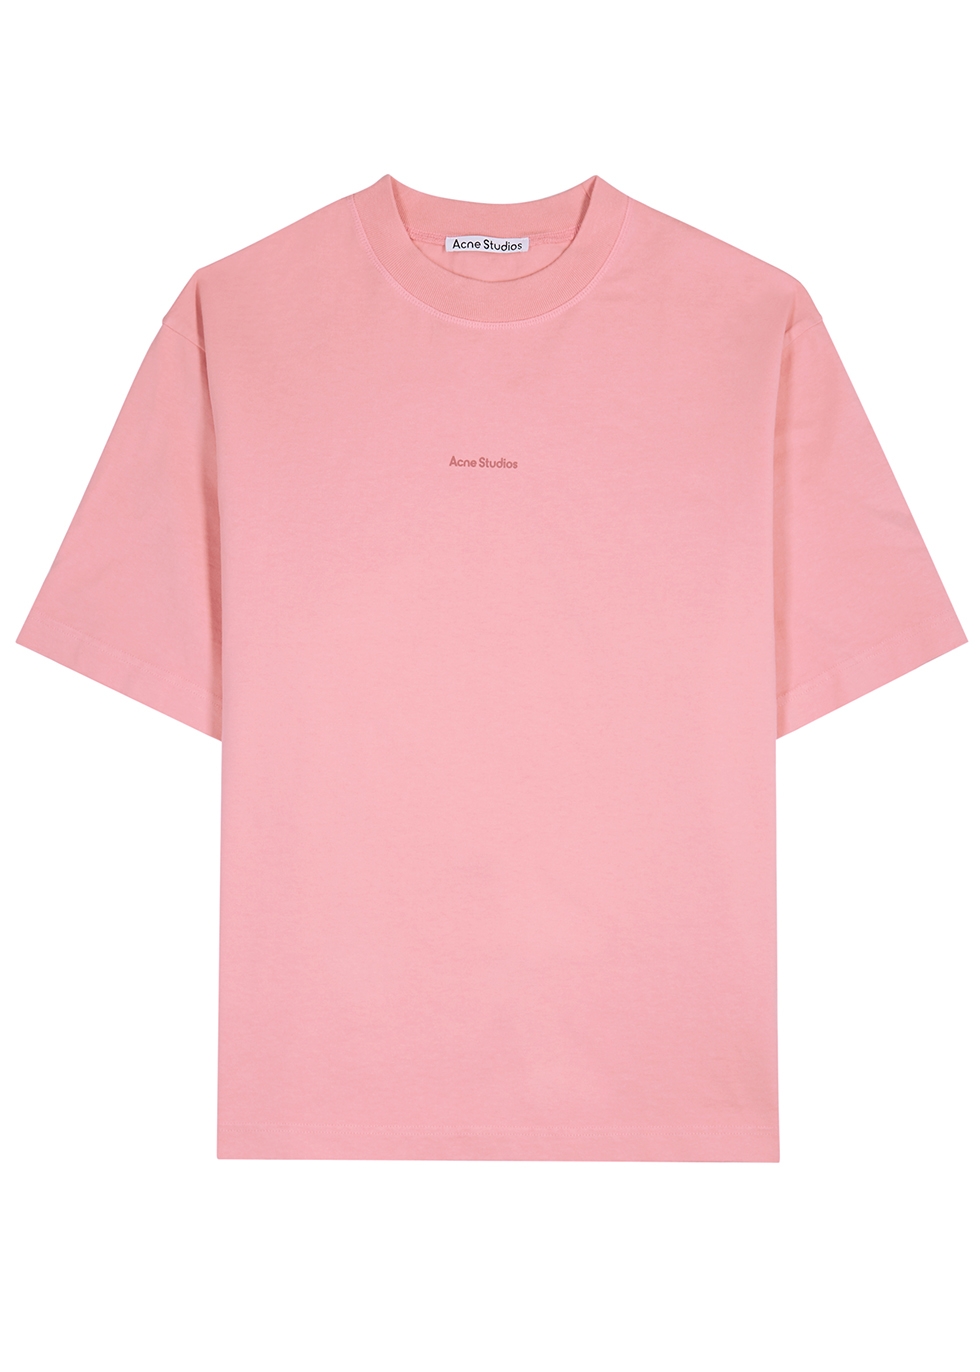 Acne Studios Extorr pink logo cotton T-shirt - Harvey Nichols